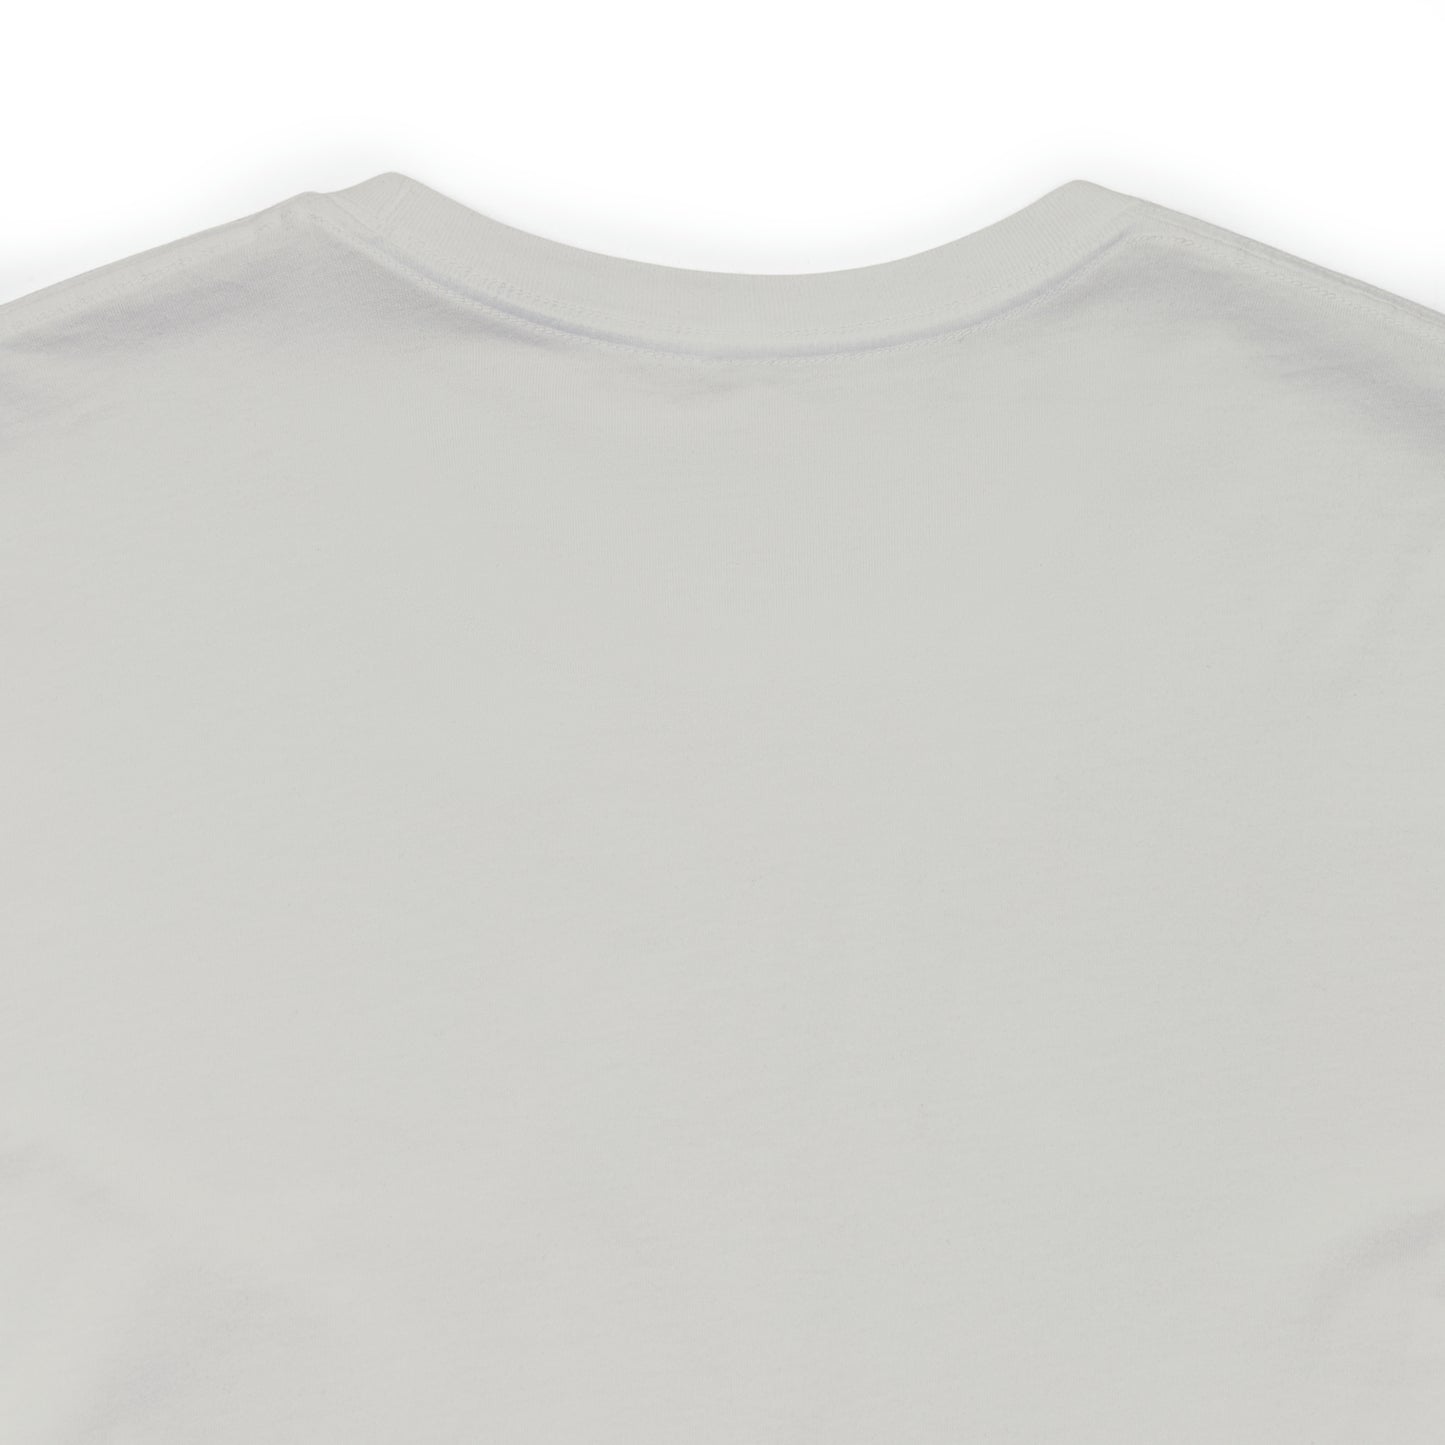 Comfy Short Sleeve T-Shirt: Spain